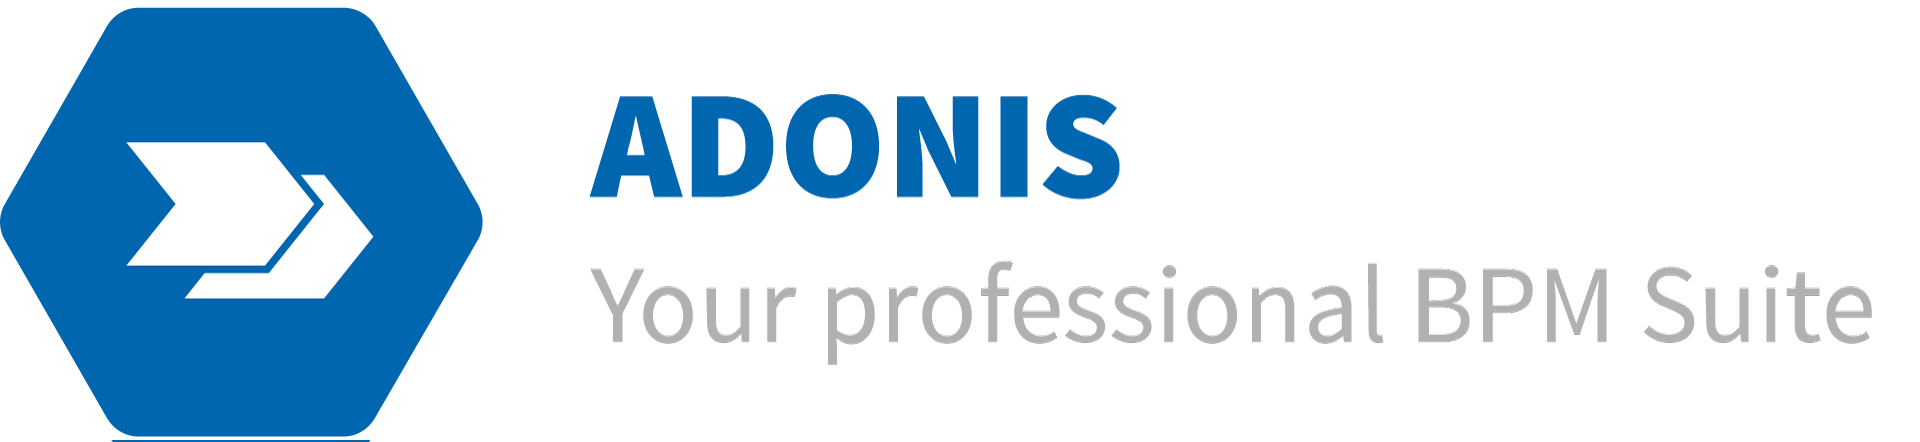 ADONIS NP renamed to ADONIS